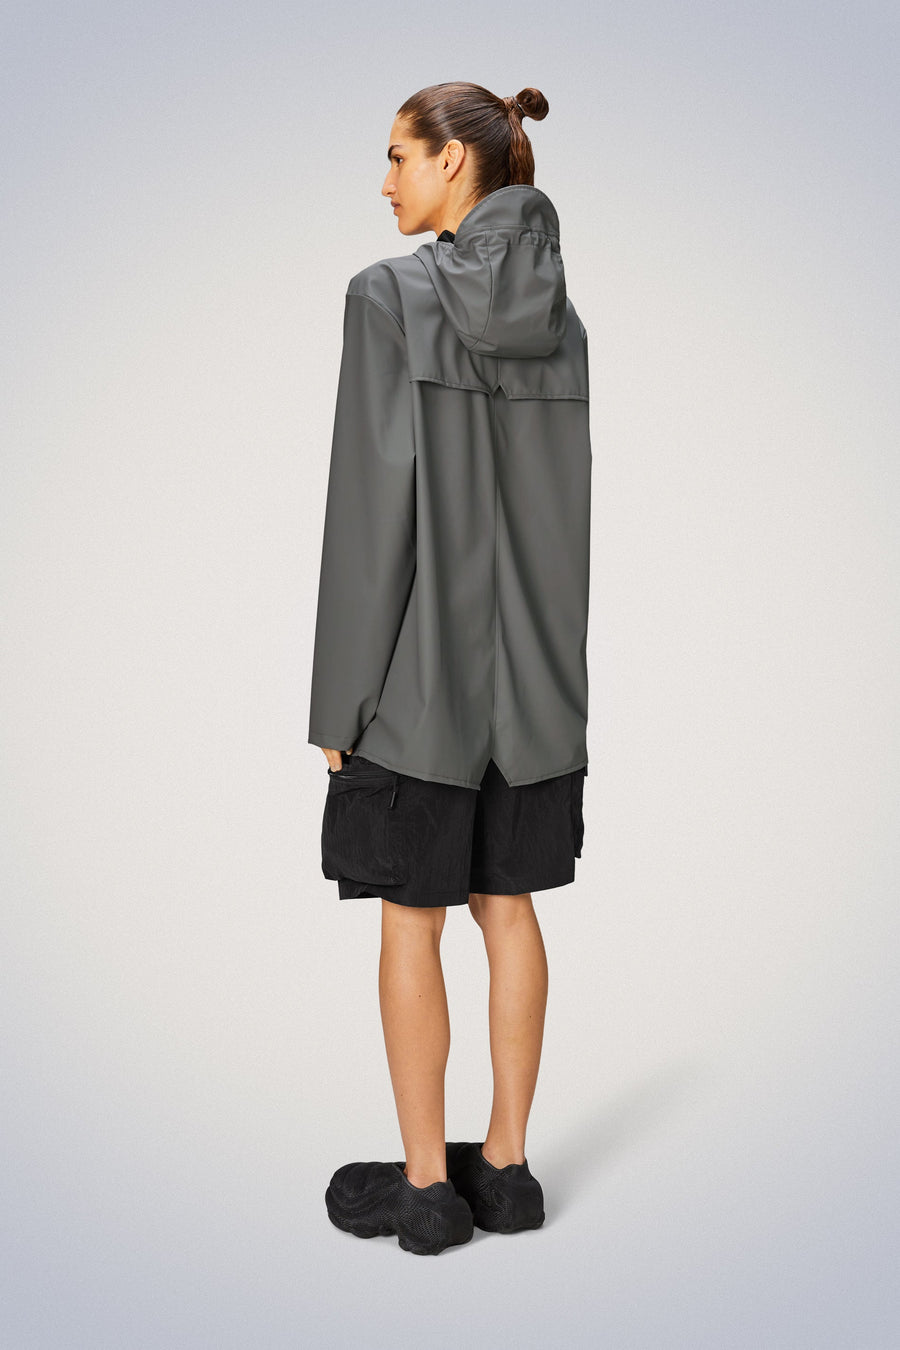 Rains Womens Jacket in grey